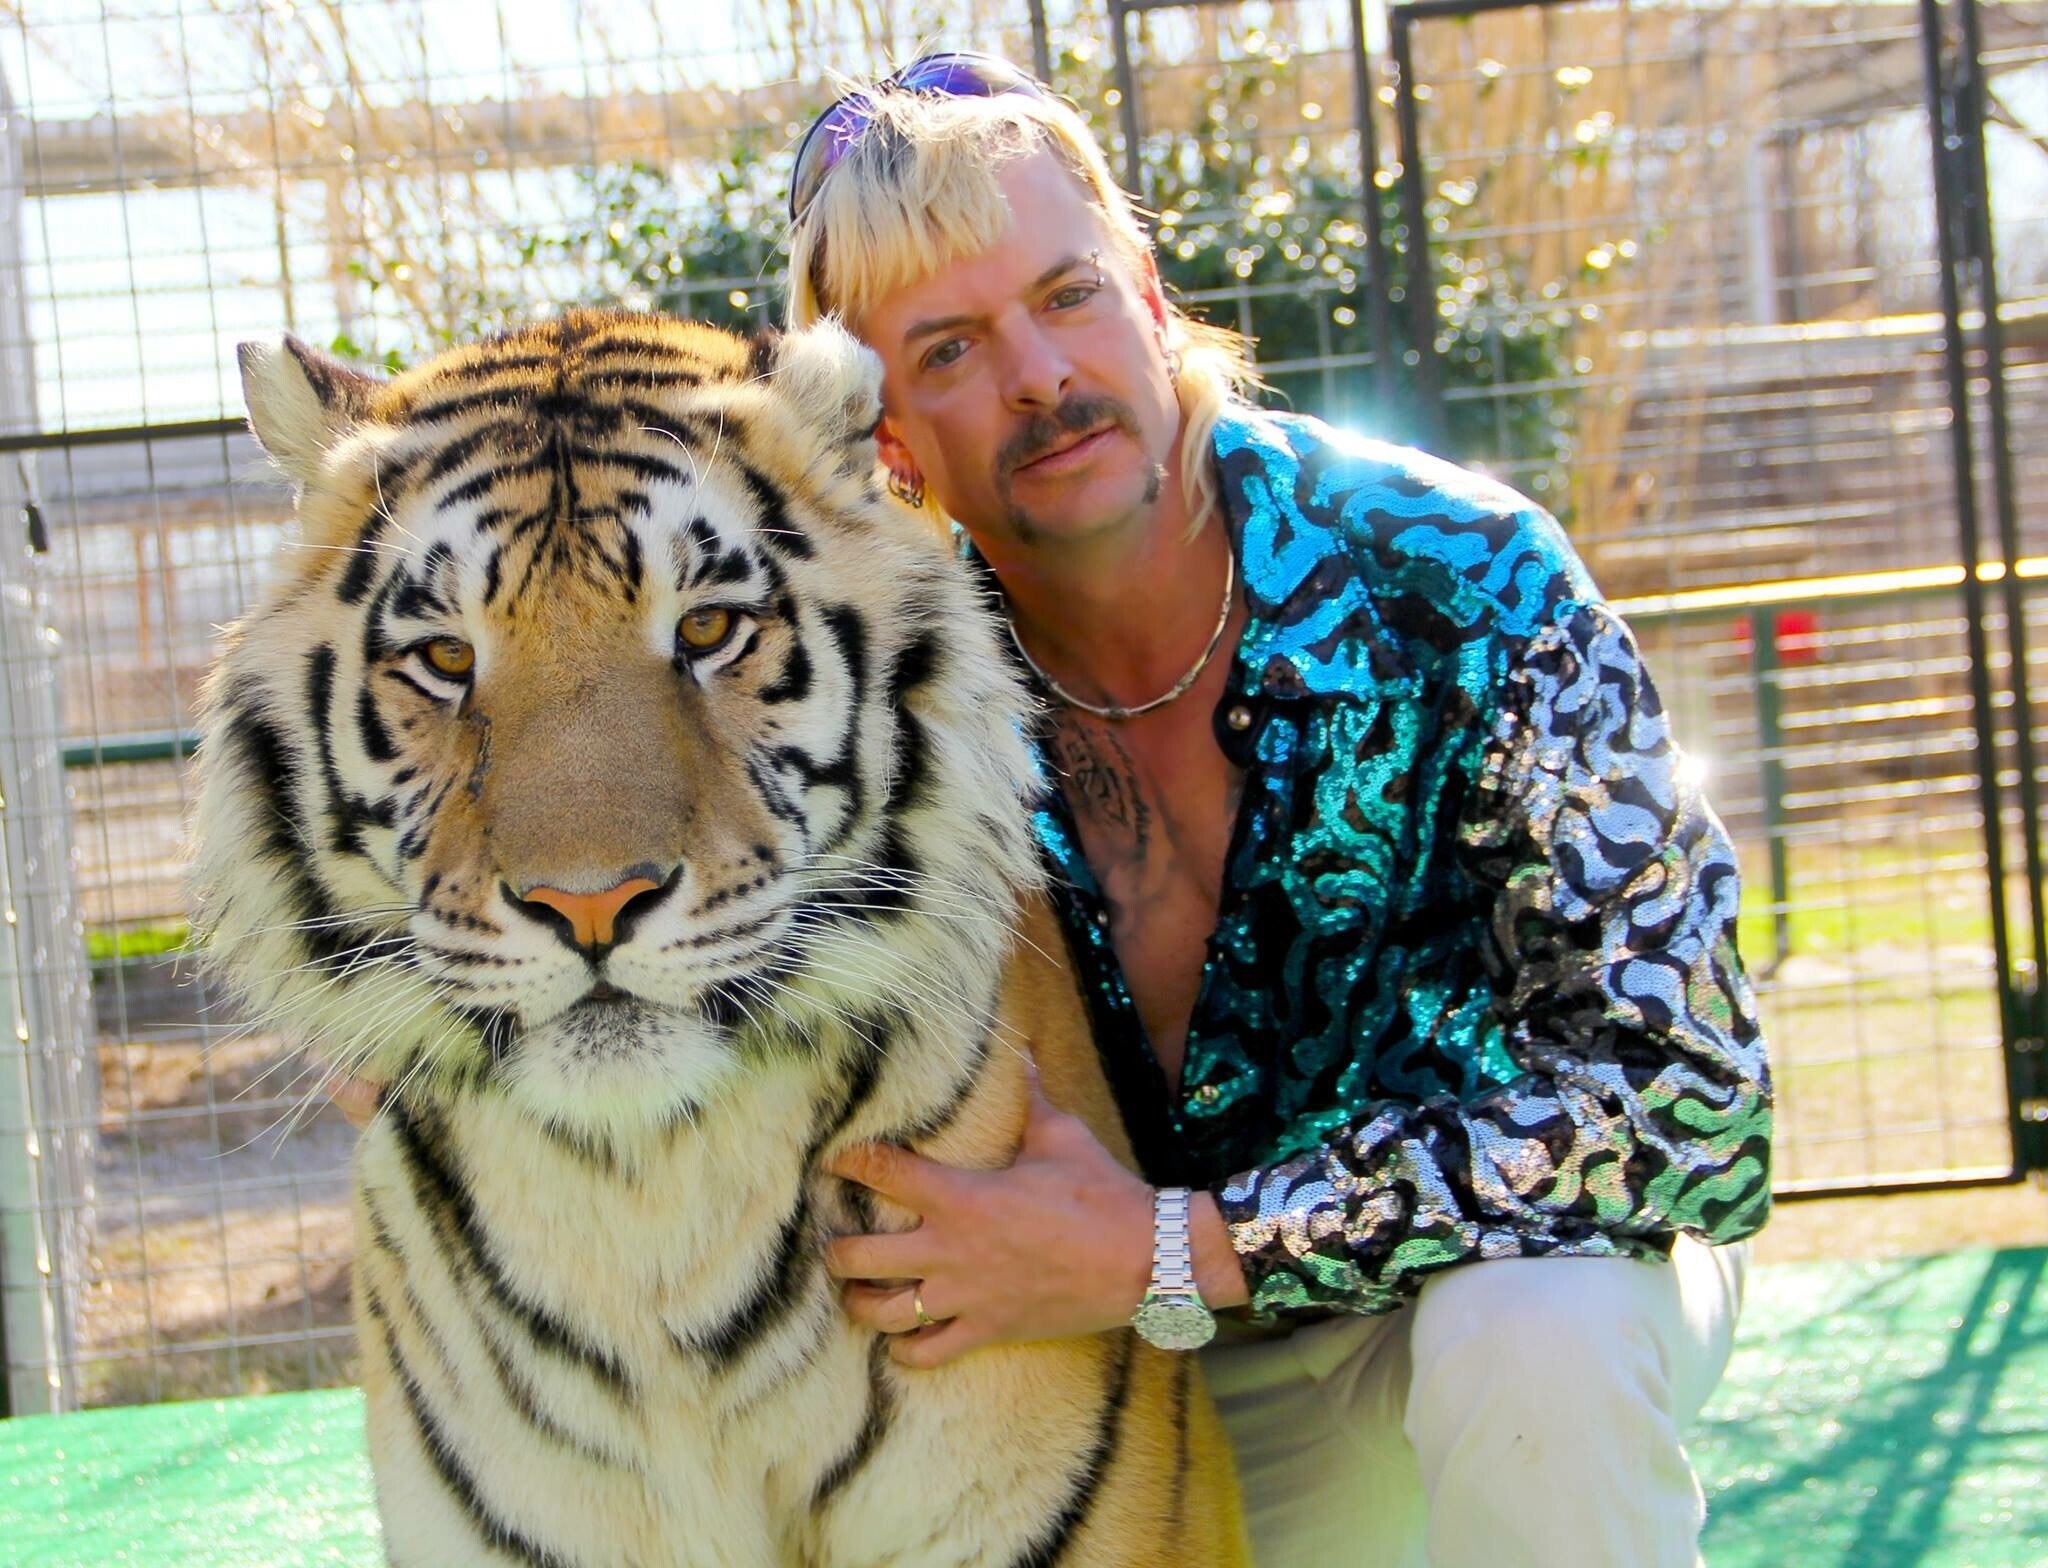 Joe Tiger with a tiger